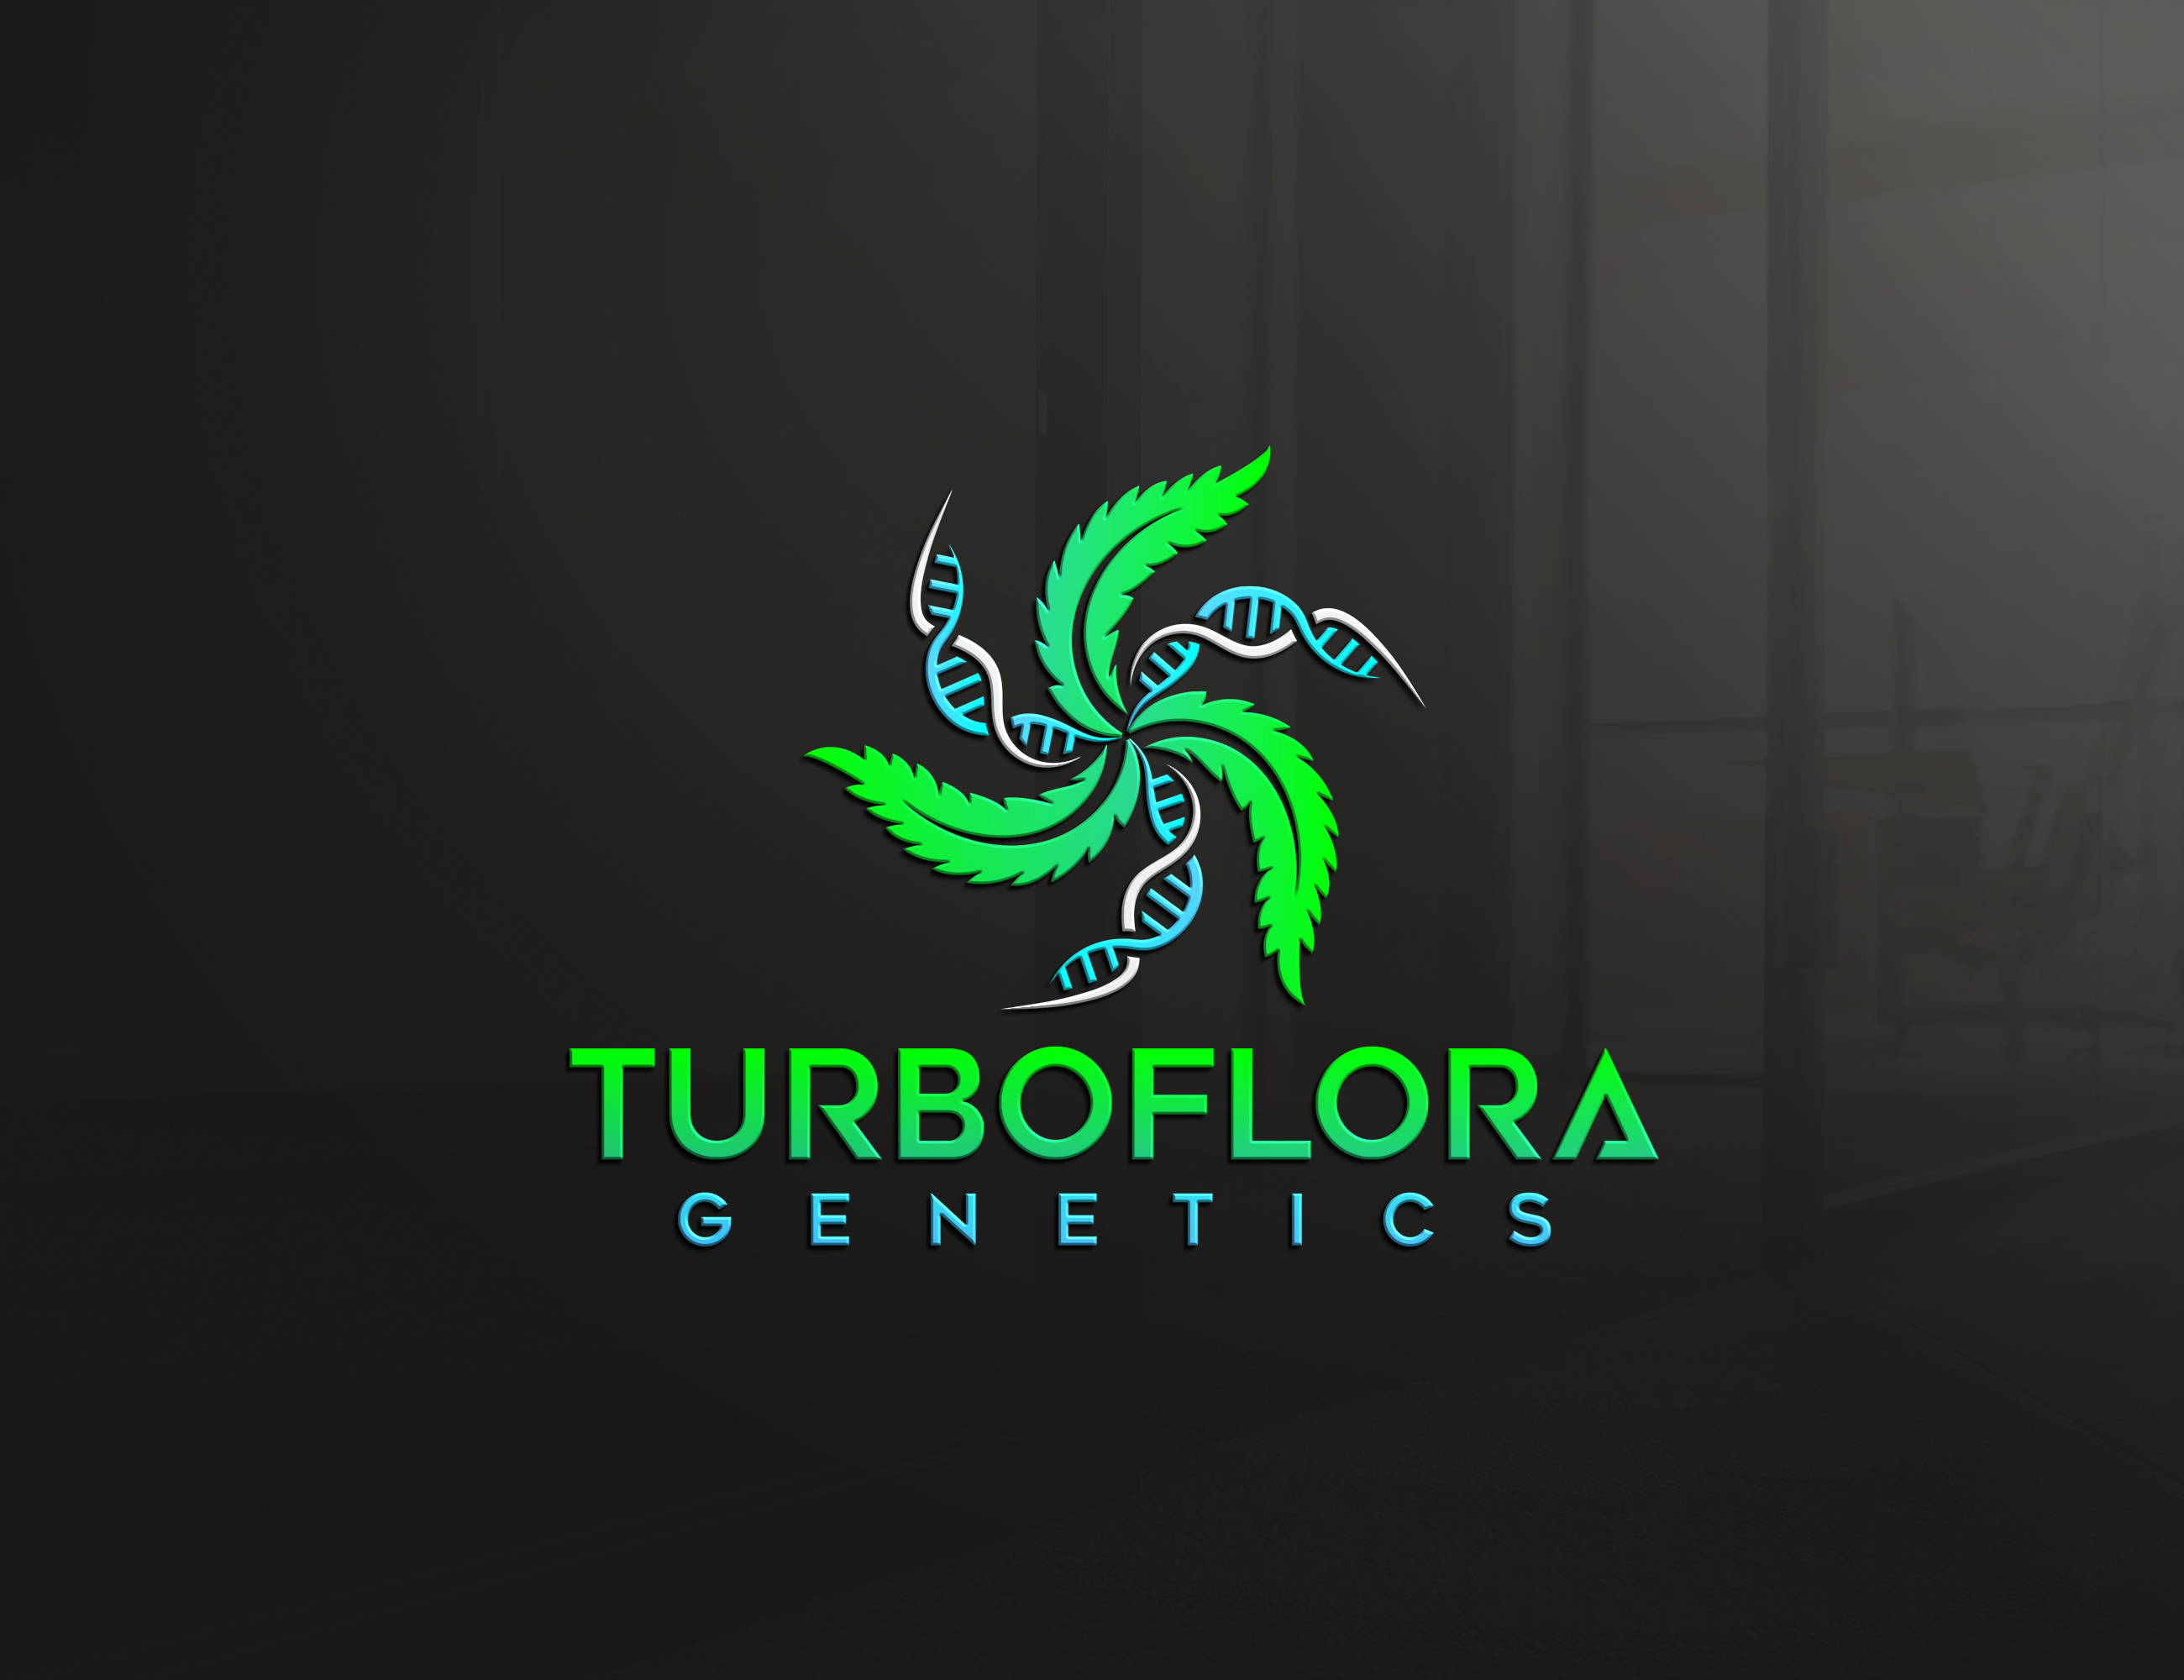 TurboFlora Genetics